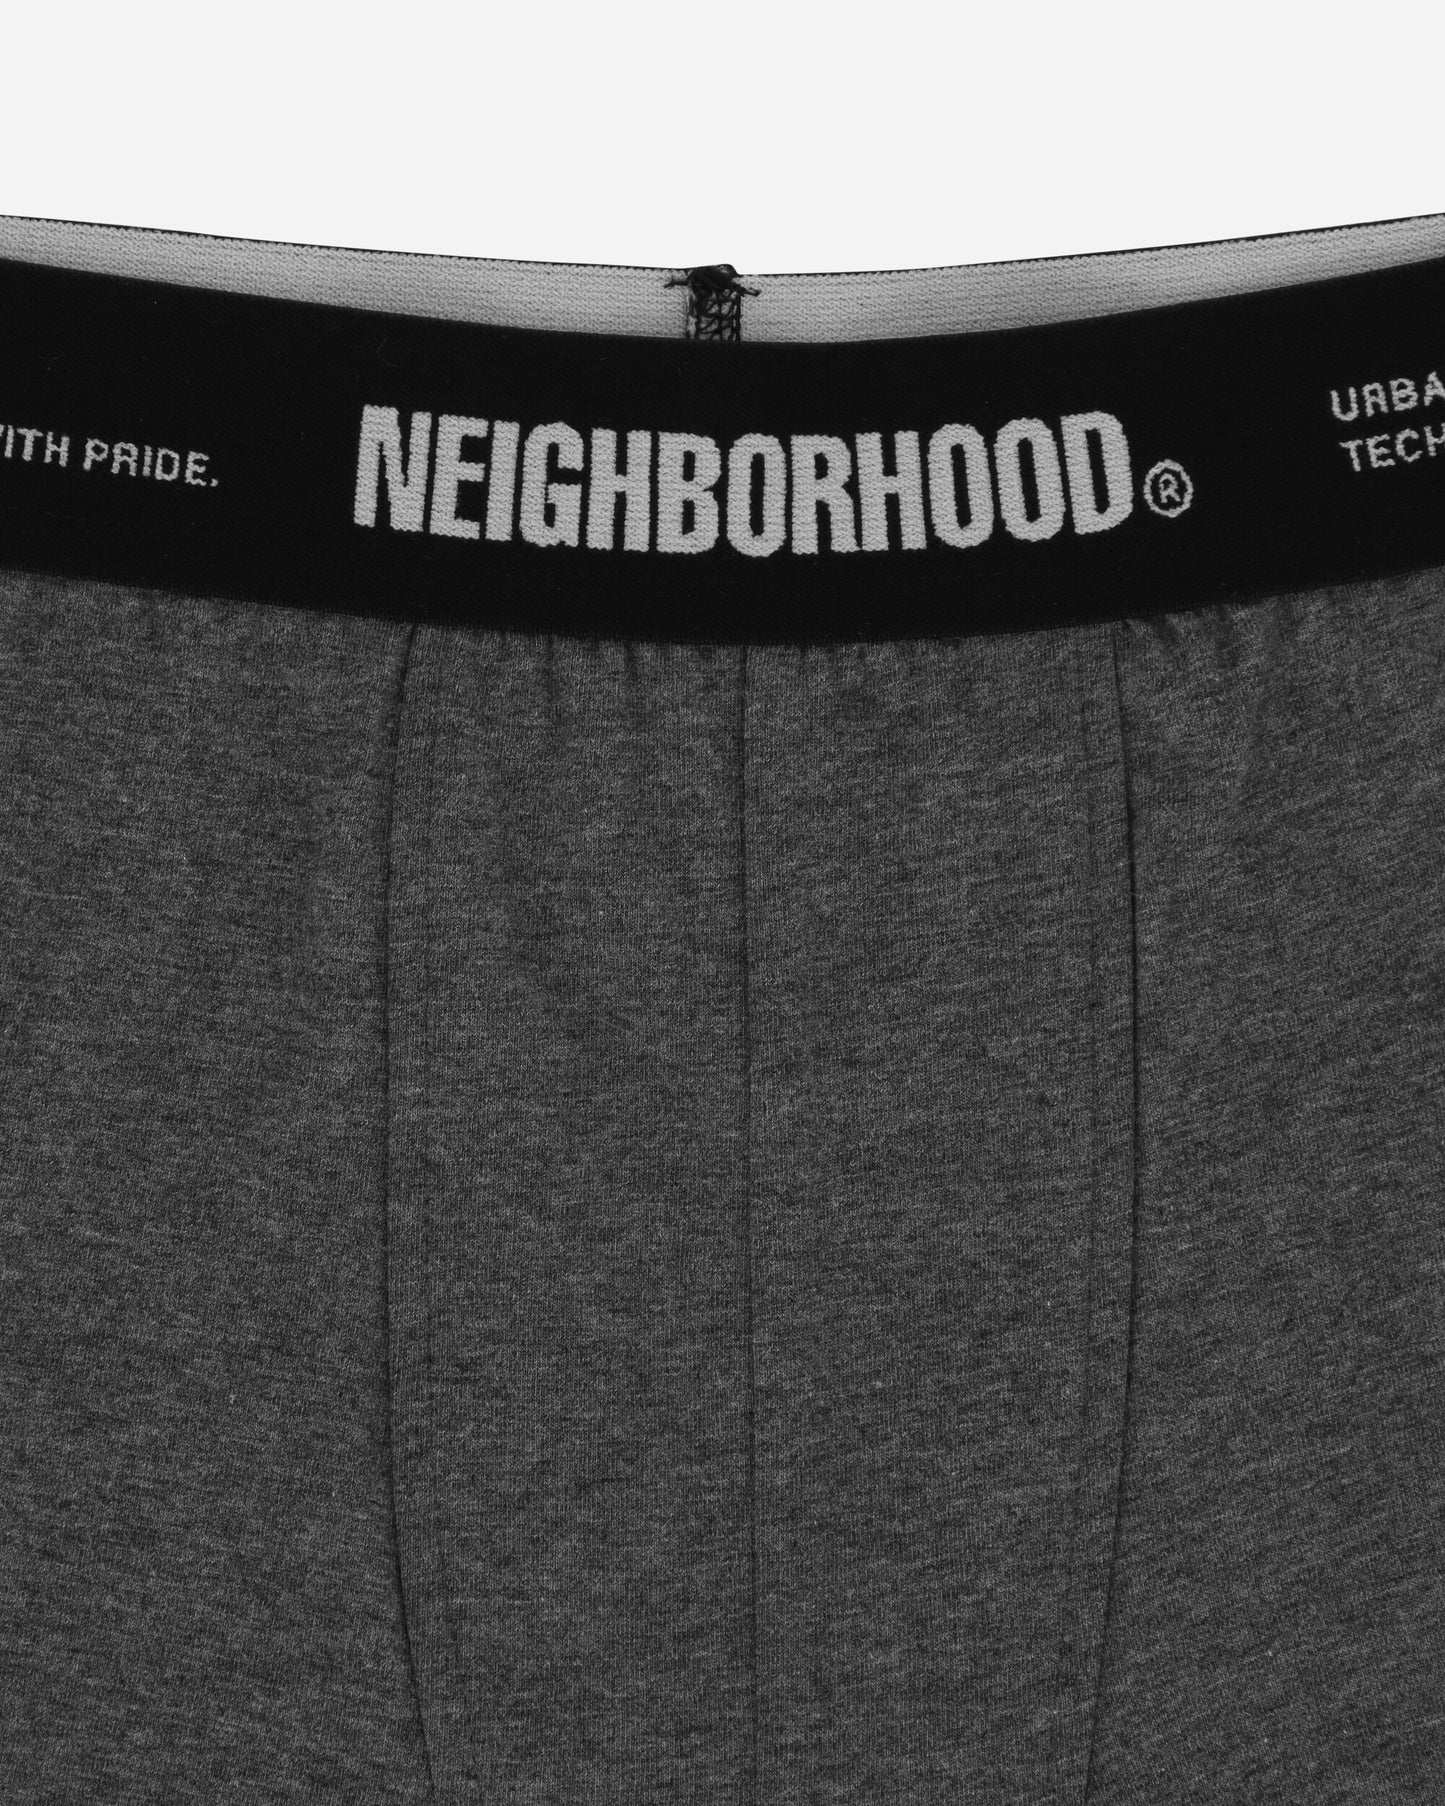 Neighborhood Classic 2Pac Unders Multi Underwear Boxers 241QTNH-UWM03 MT